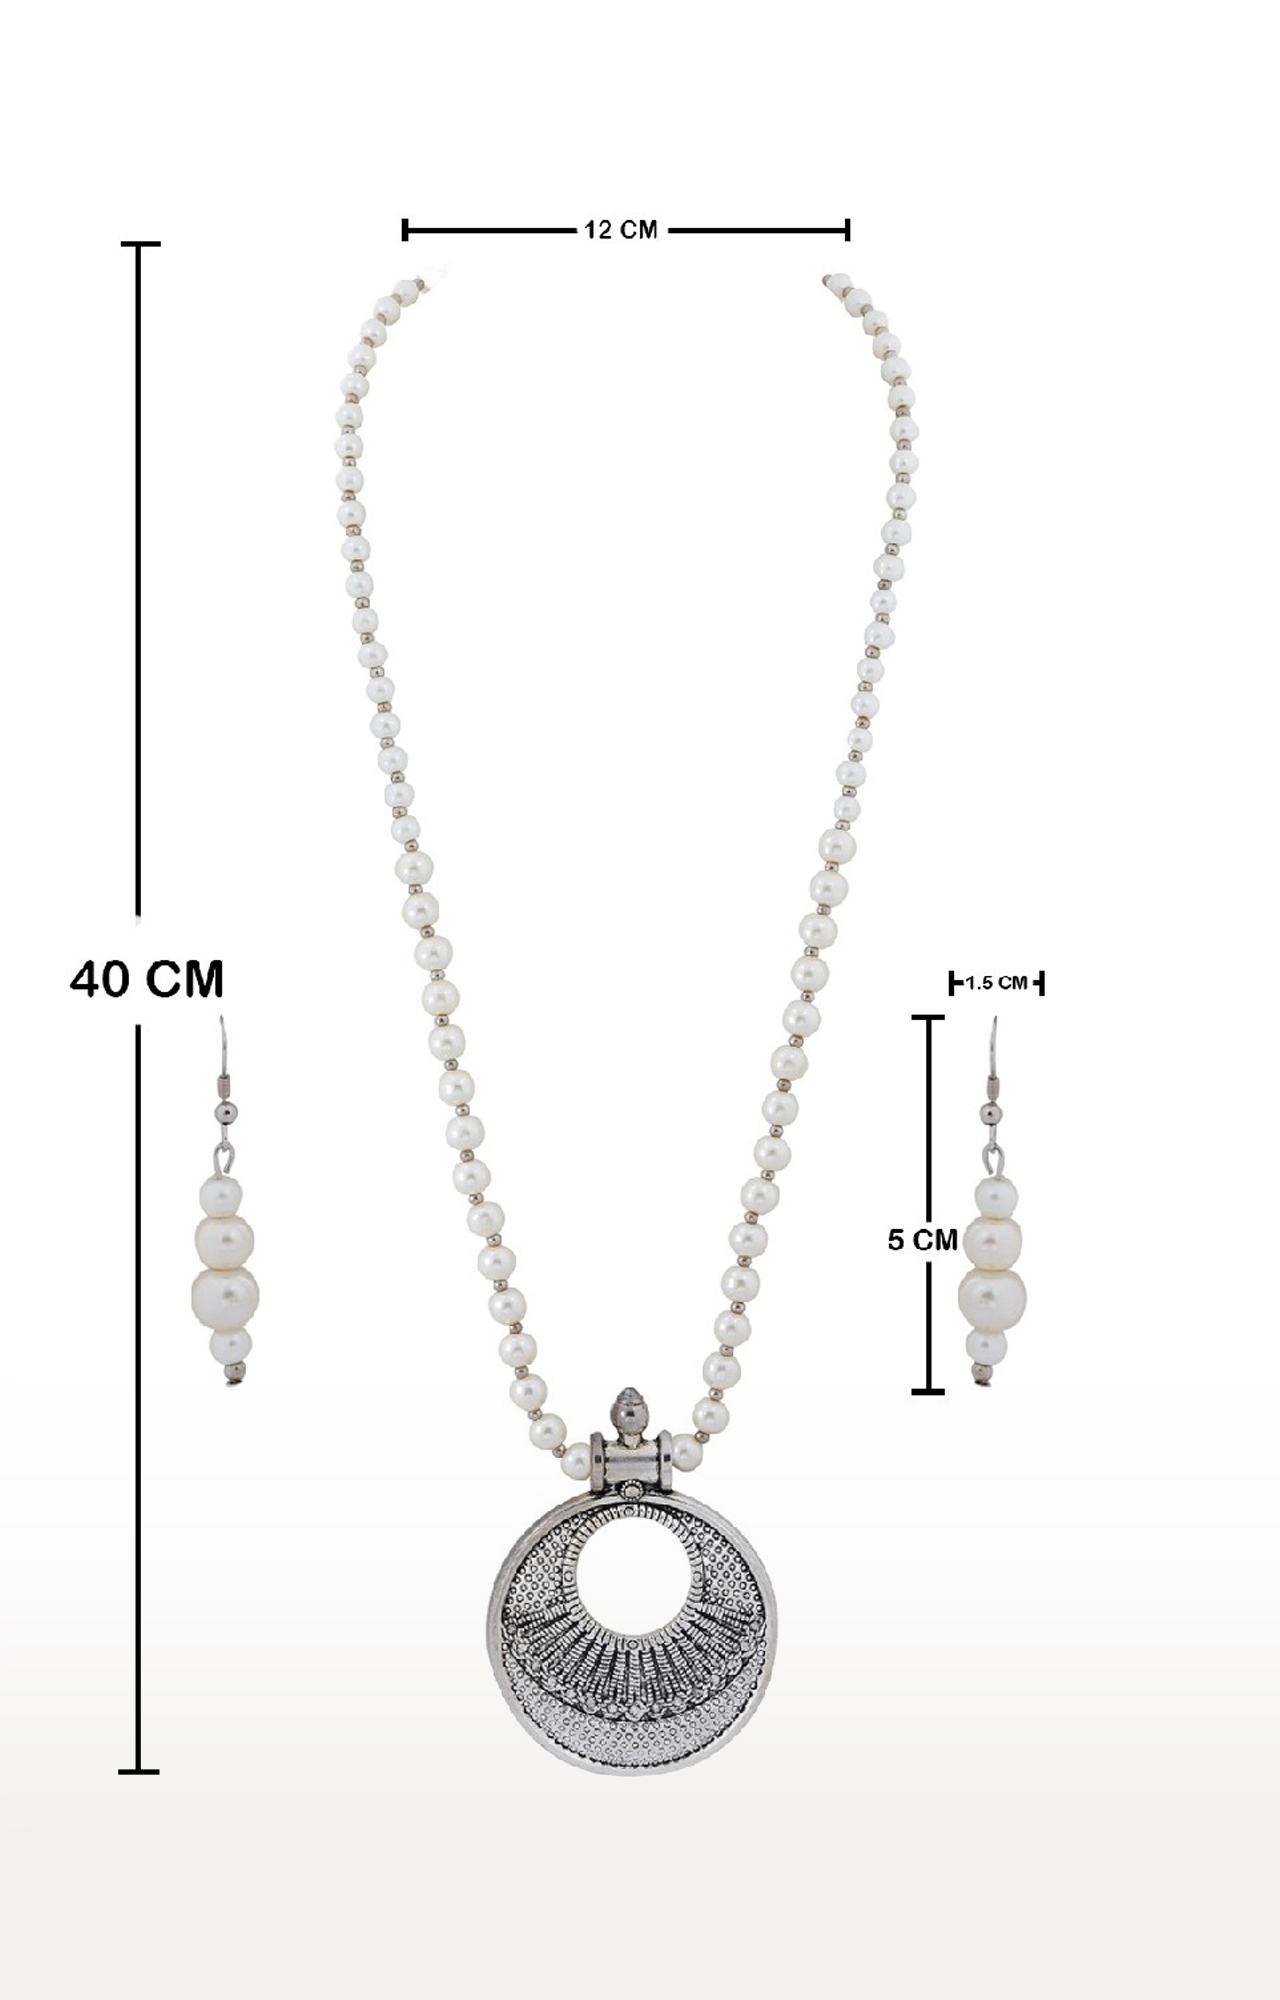 Women's Necklaces & Pendants - Luxury Women's Jewelry